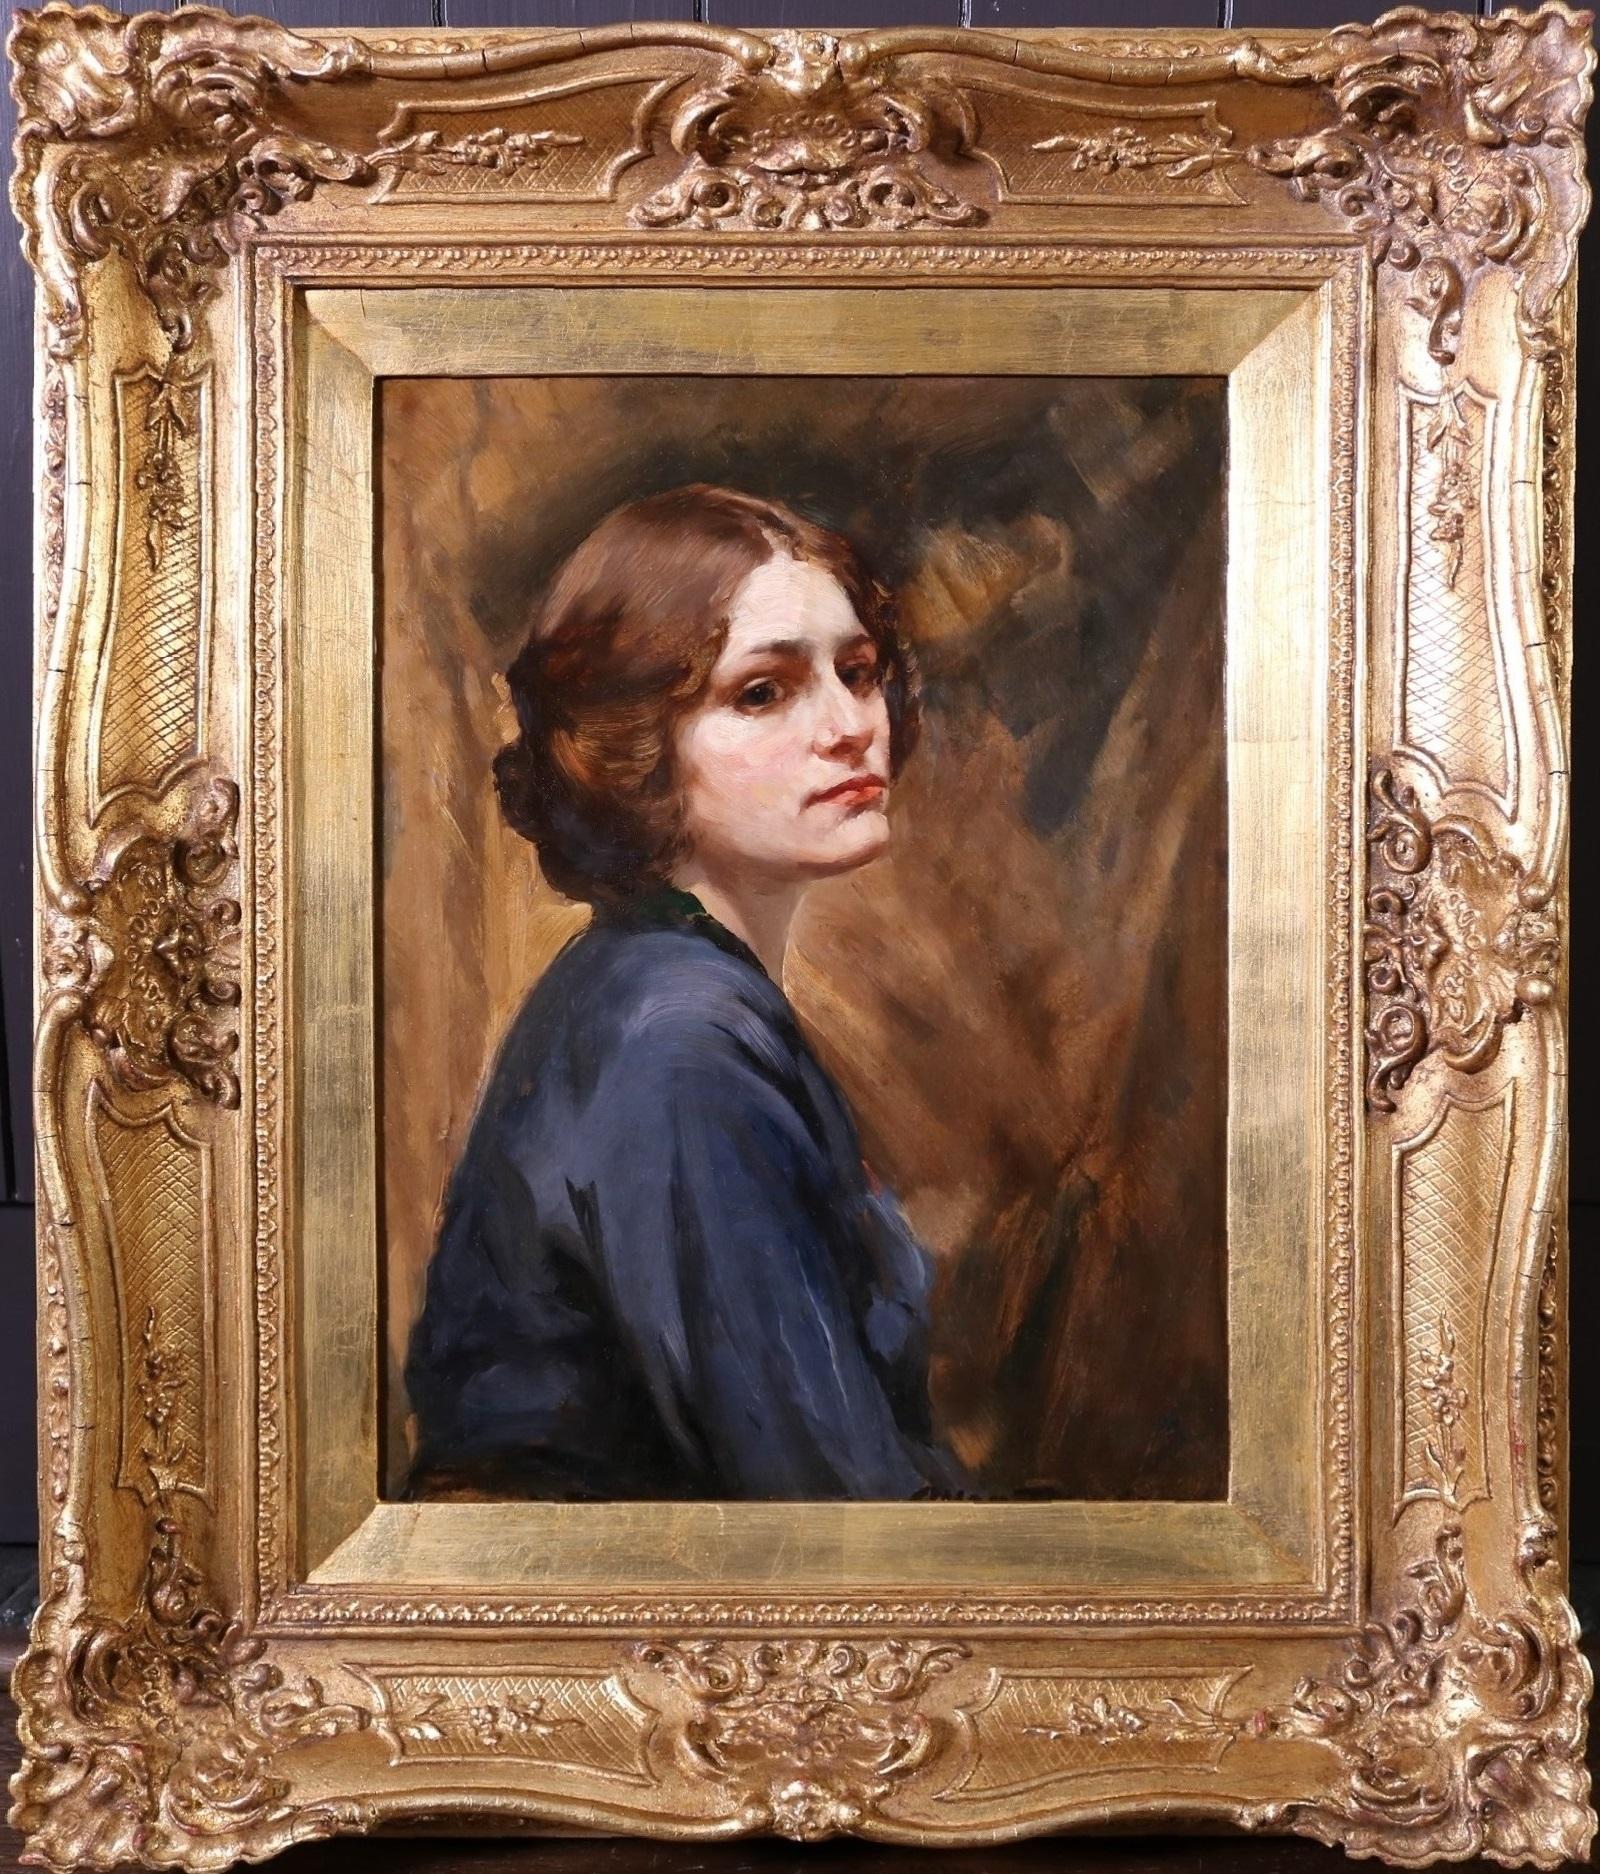 Allan Douglas Davidson Figurative Painting - An Edwardian Beauty - Fine Early 20th Century English Girl Portrait Oil Painting